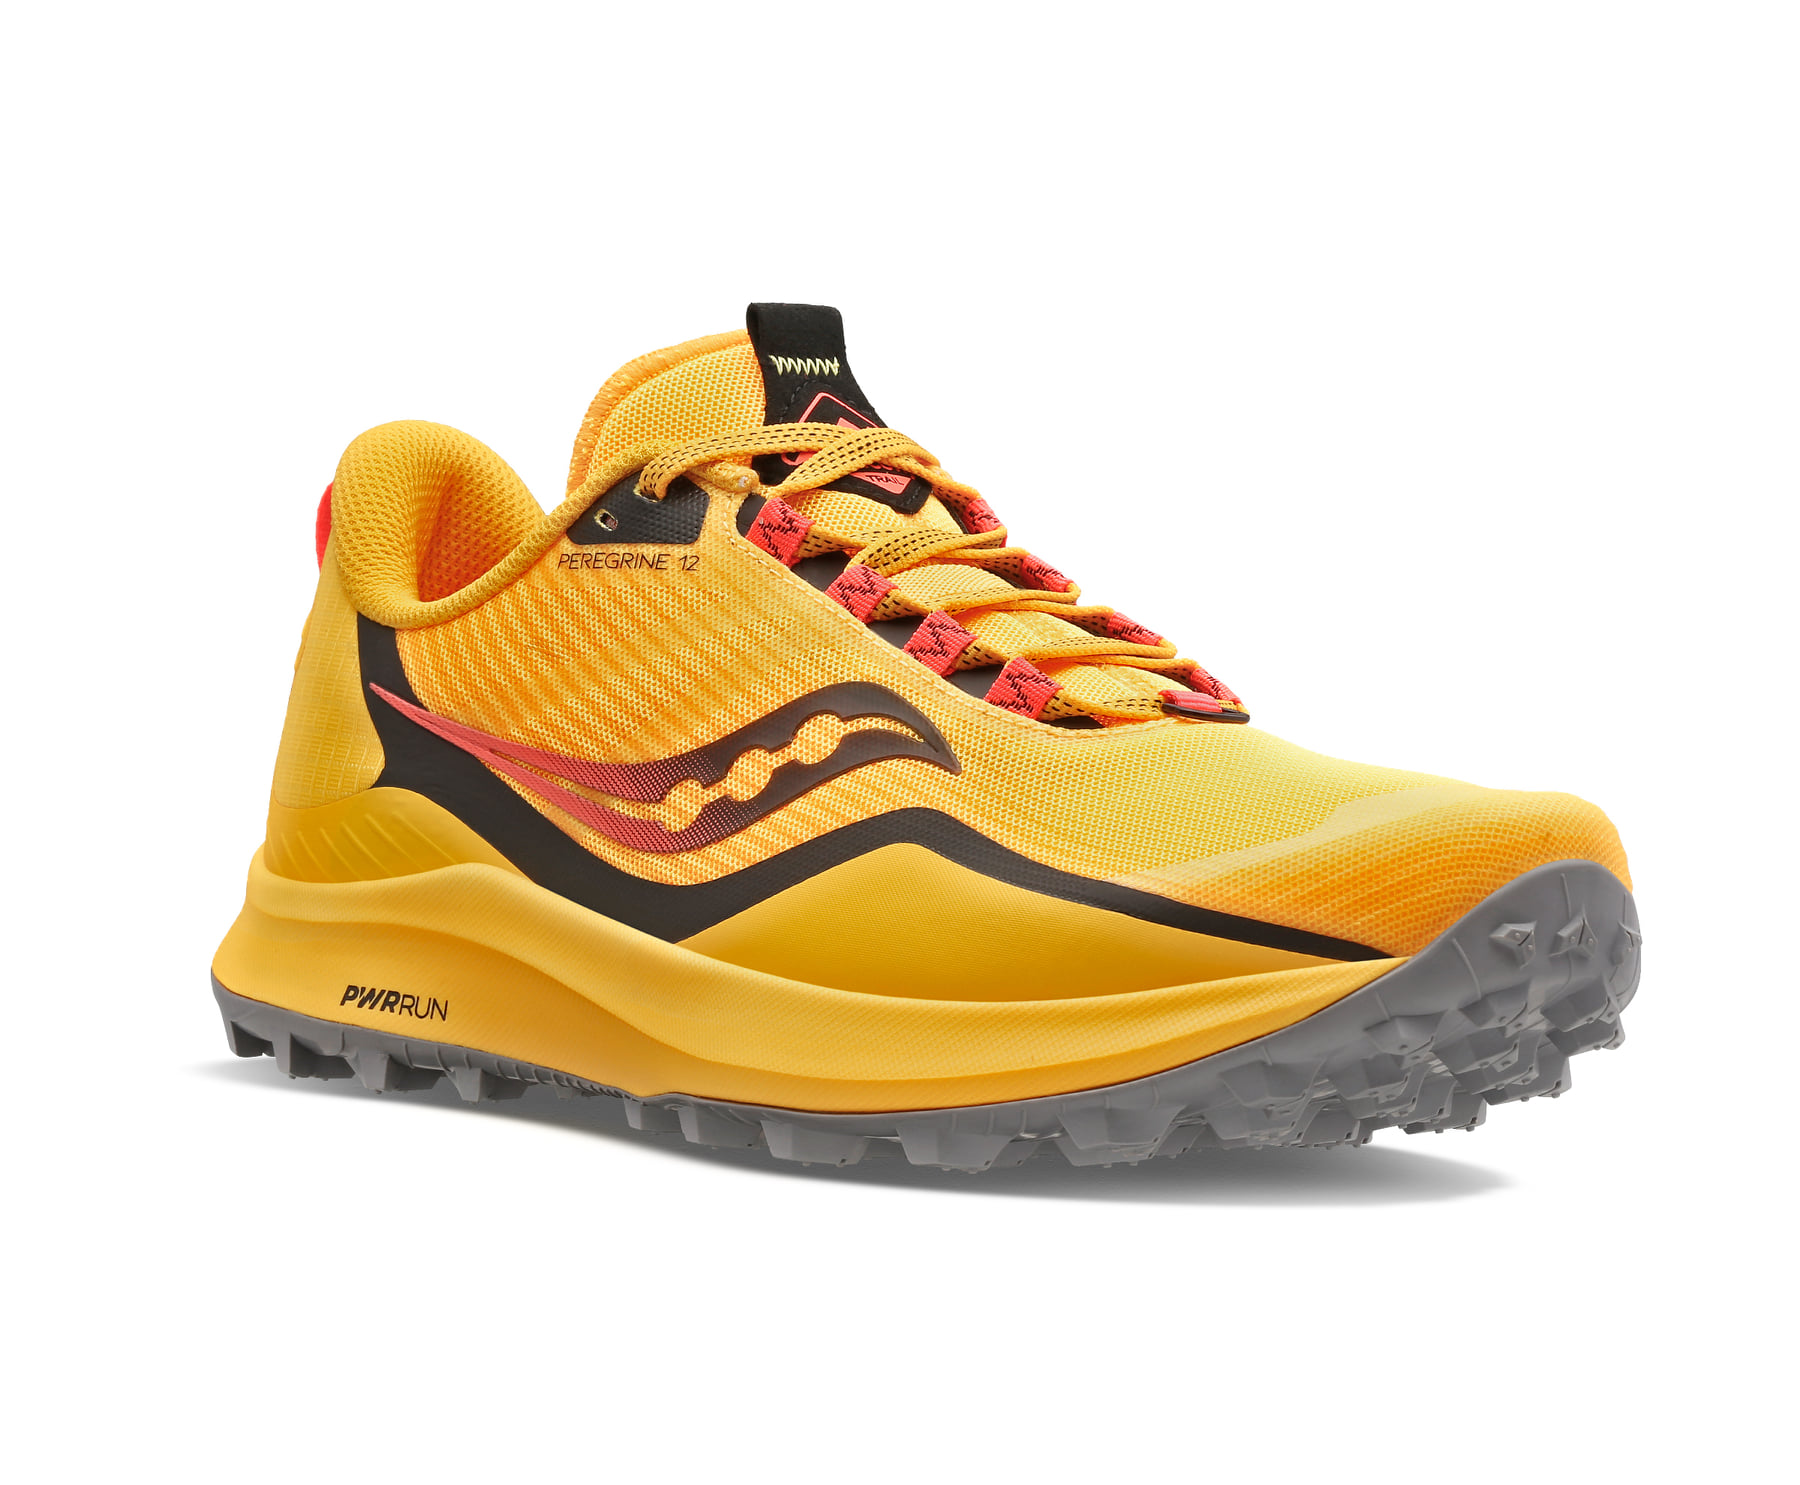 Saucony Peregrine 12 off-road running shoe in orange